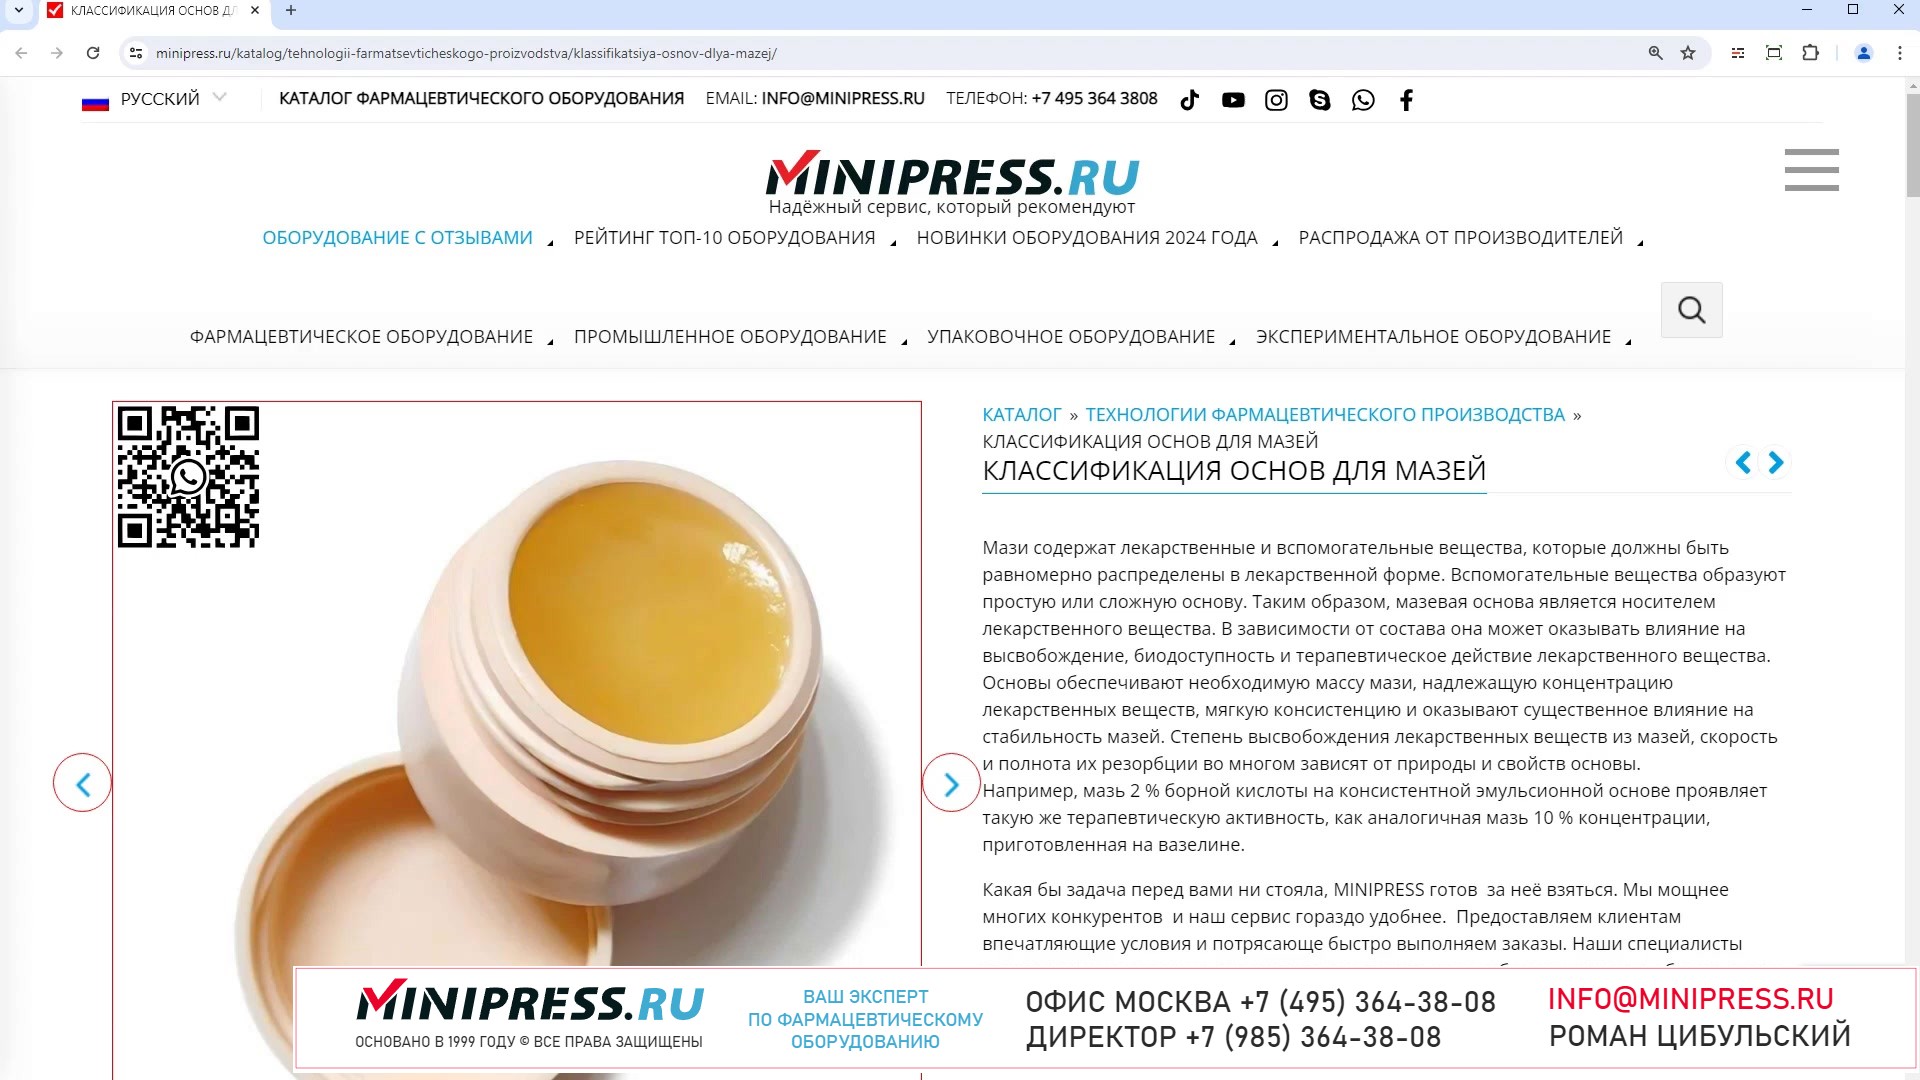 Minipress.ru Классификация основ для мазей